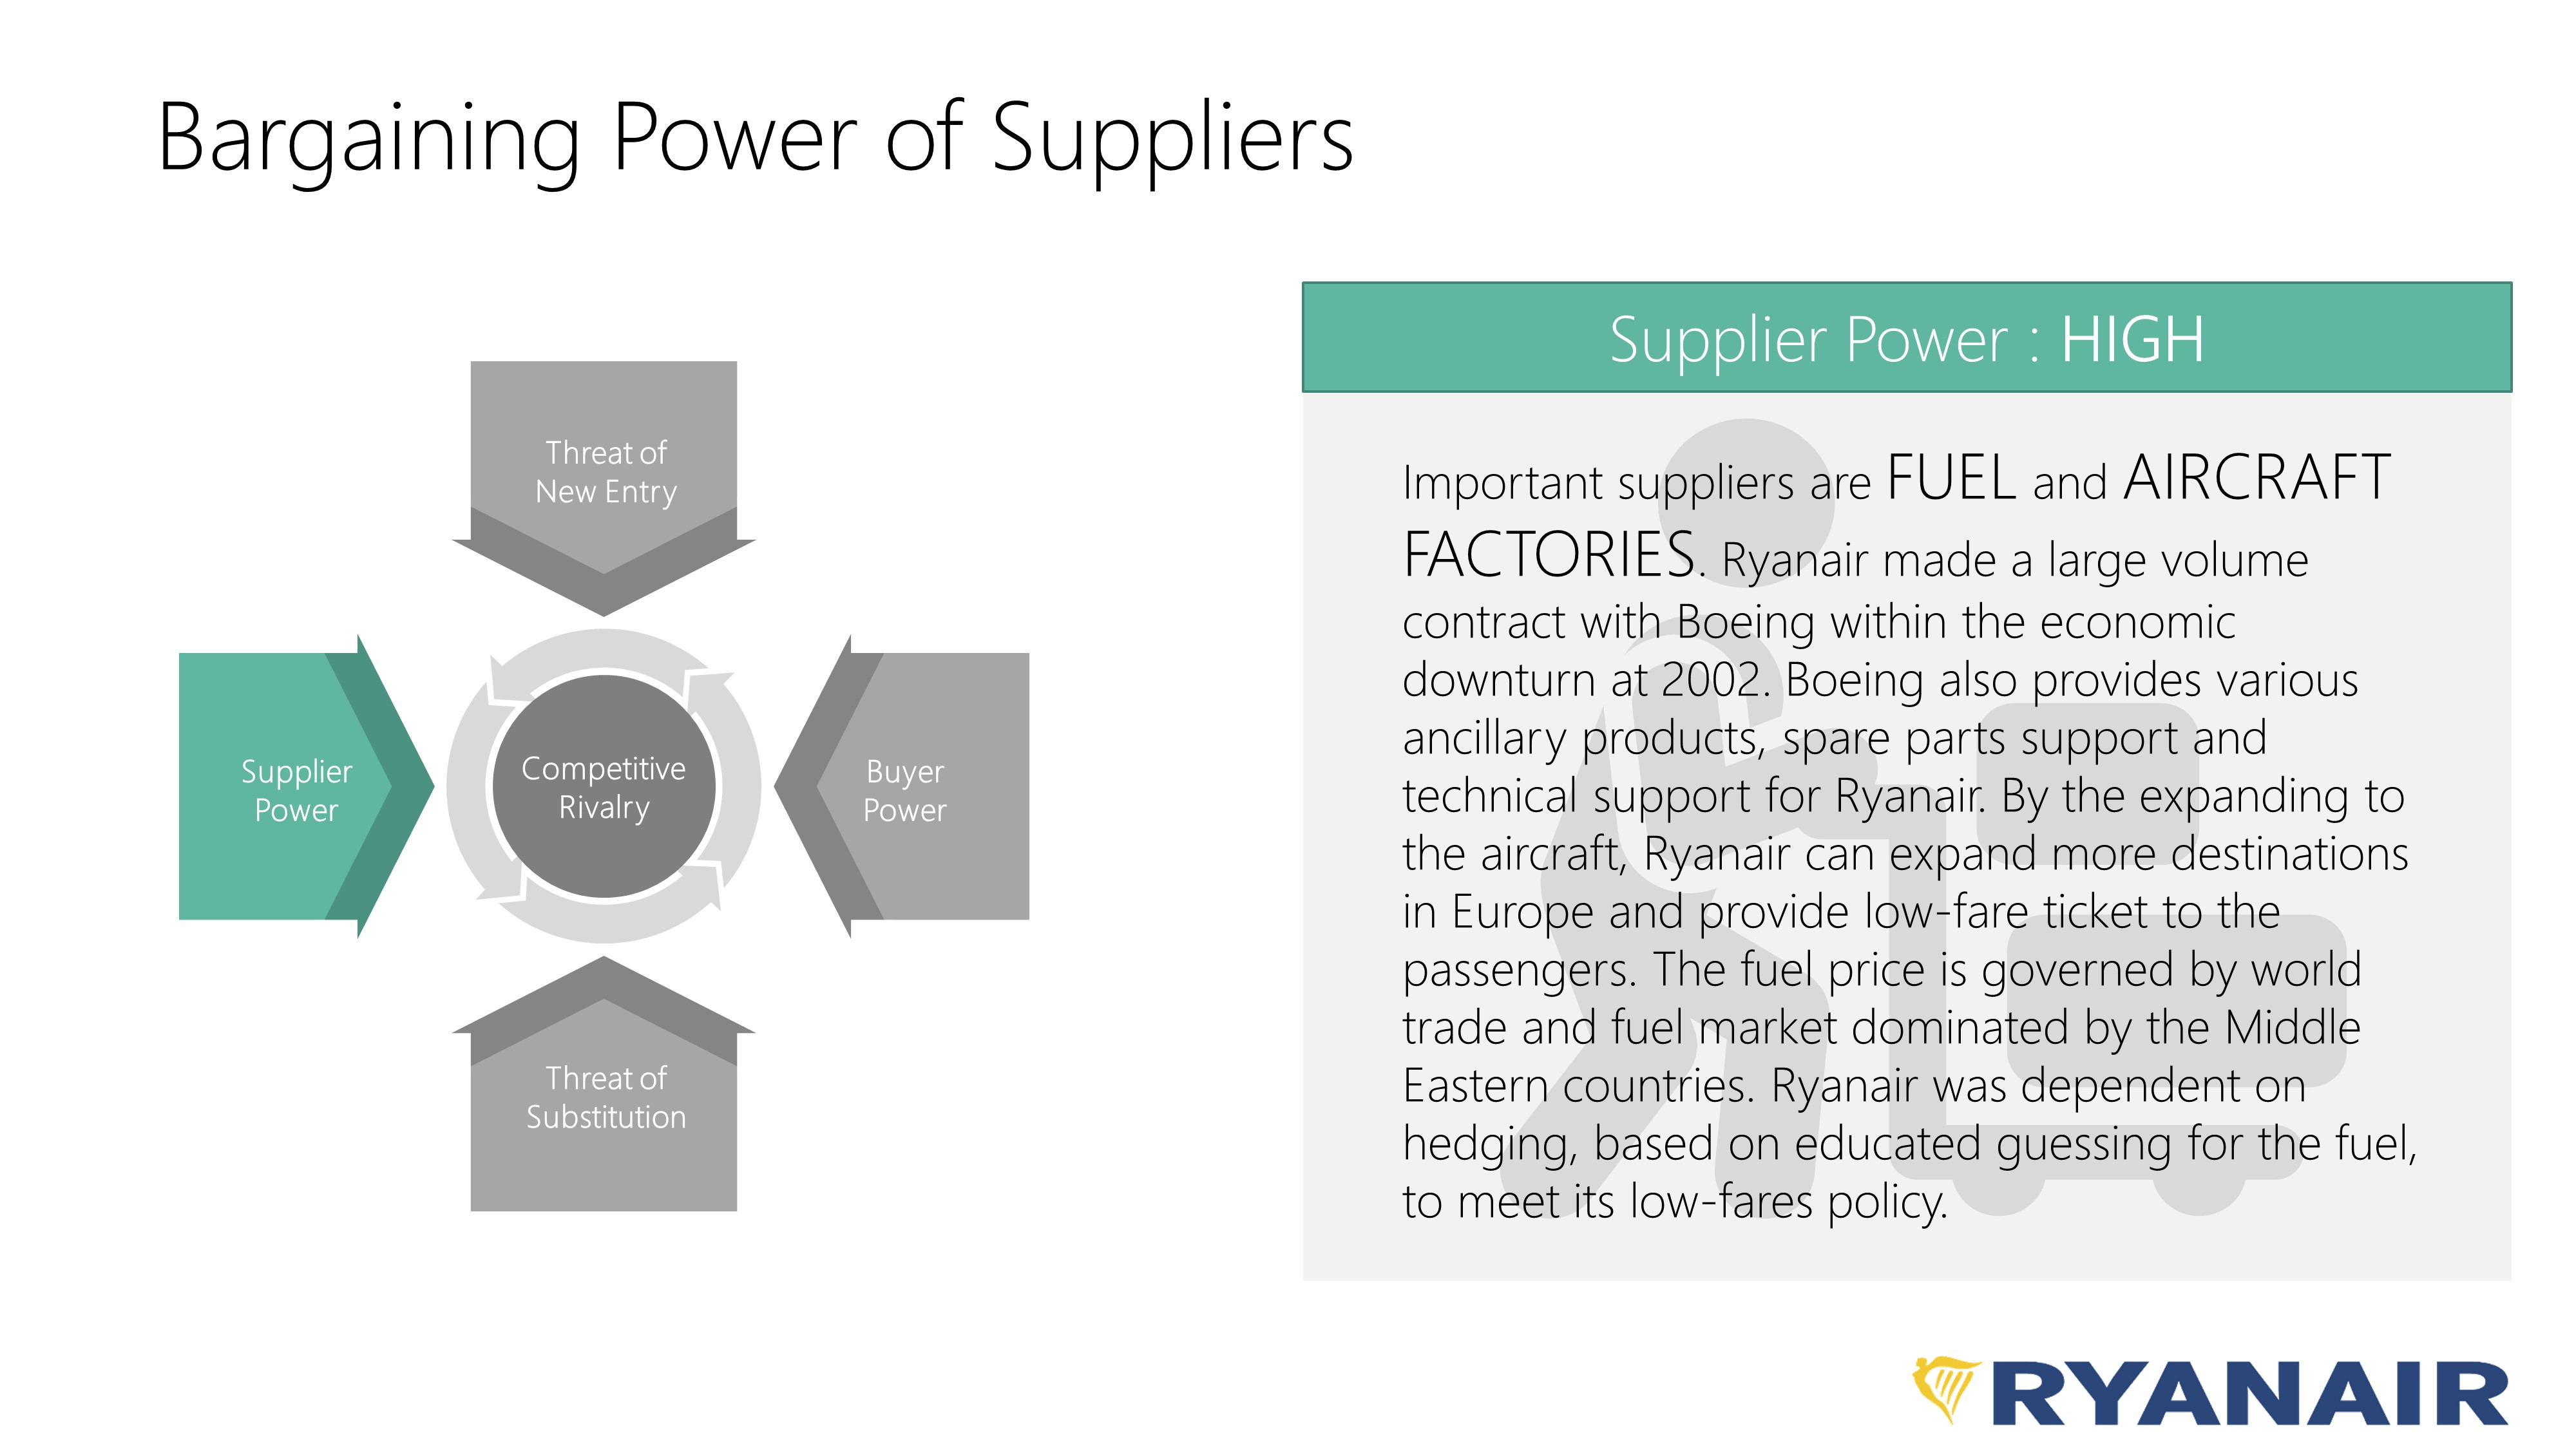 Ryan Air Supplier Power Analysis